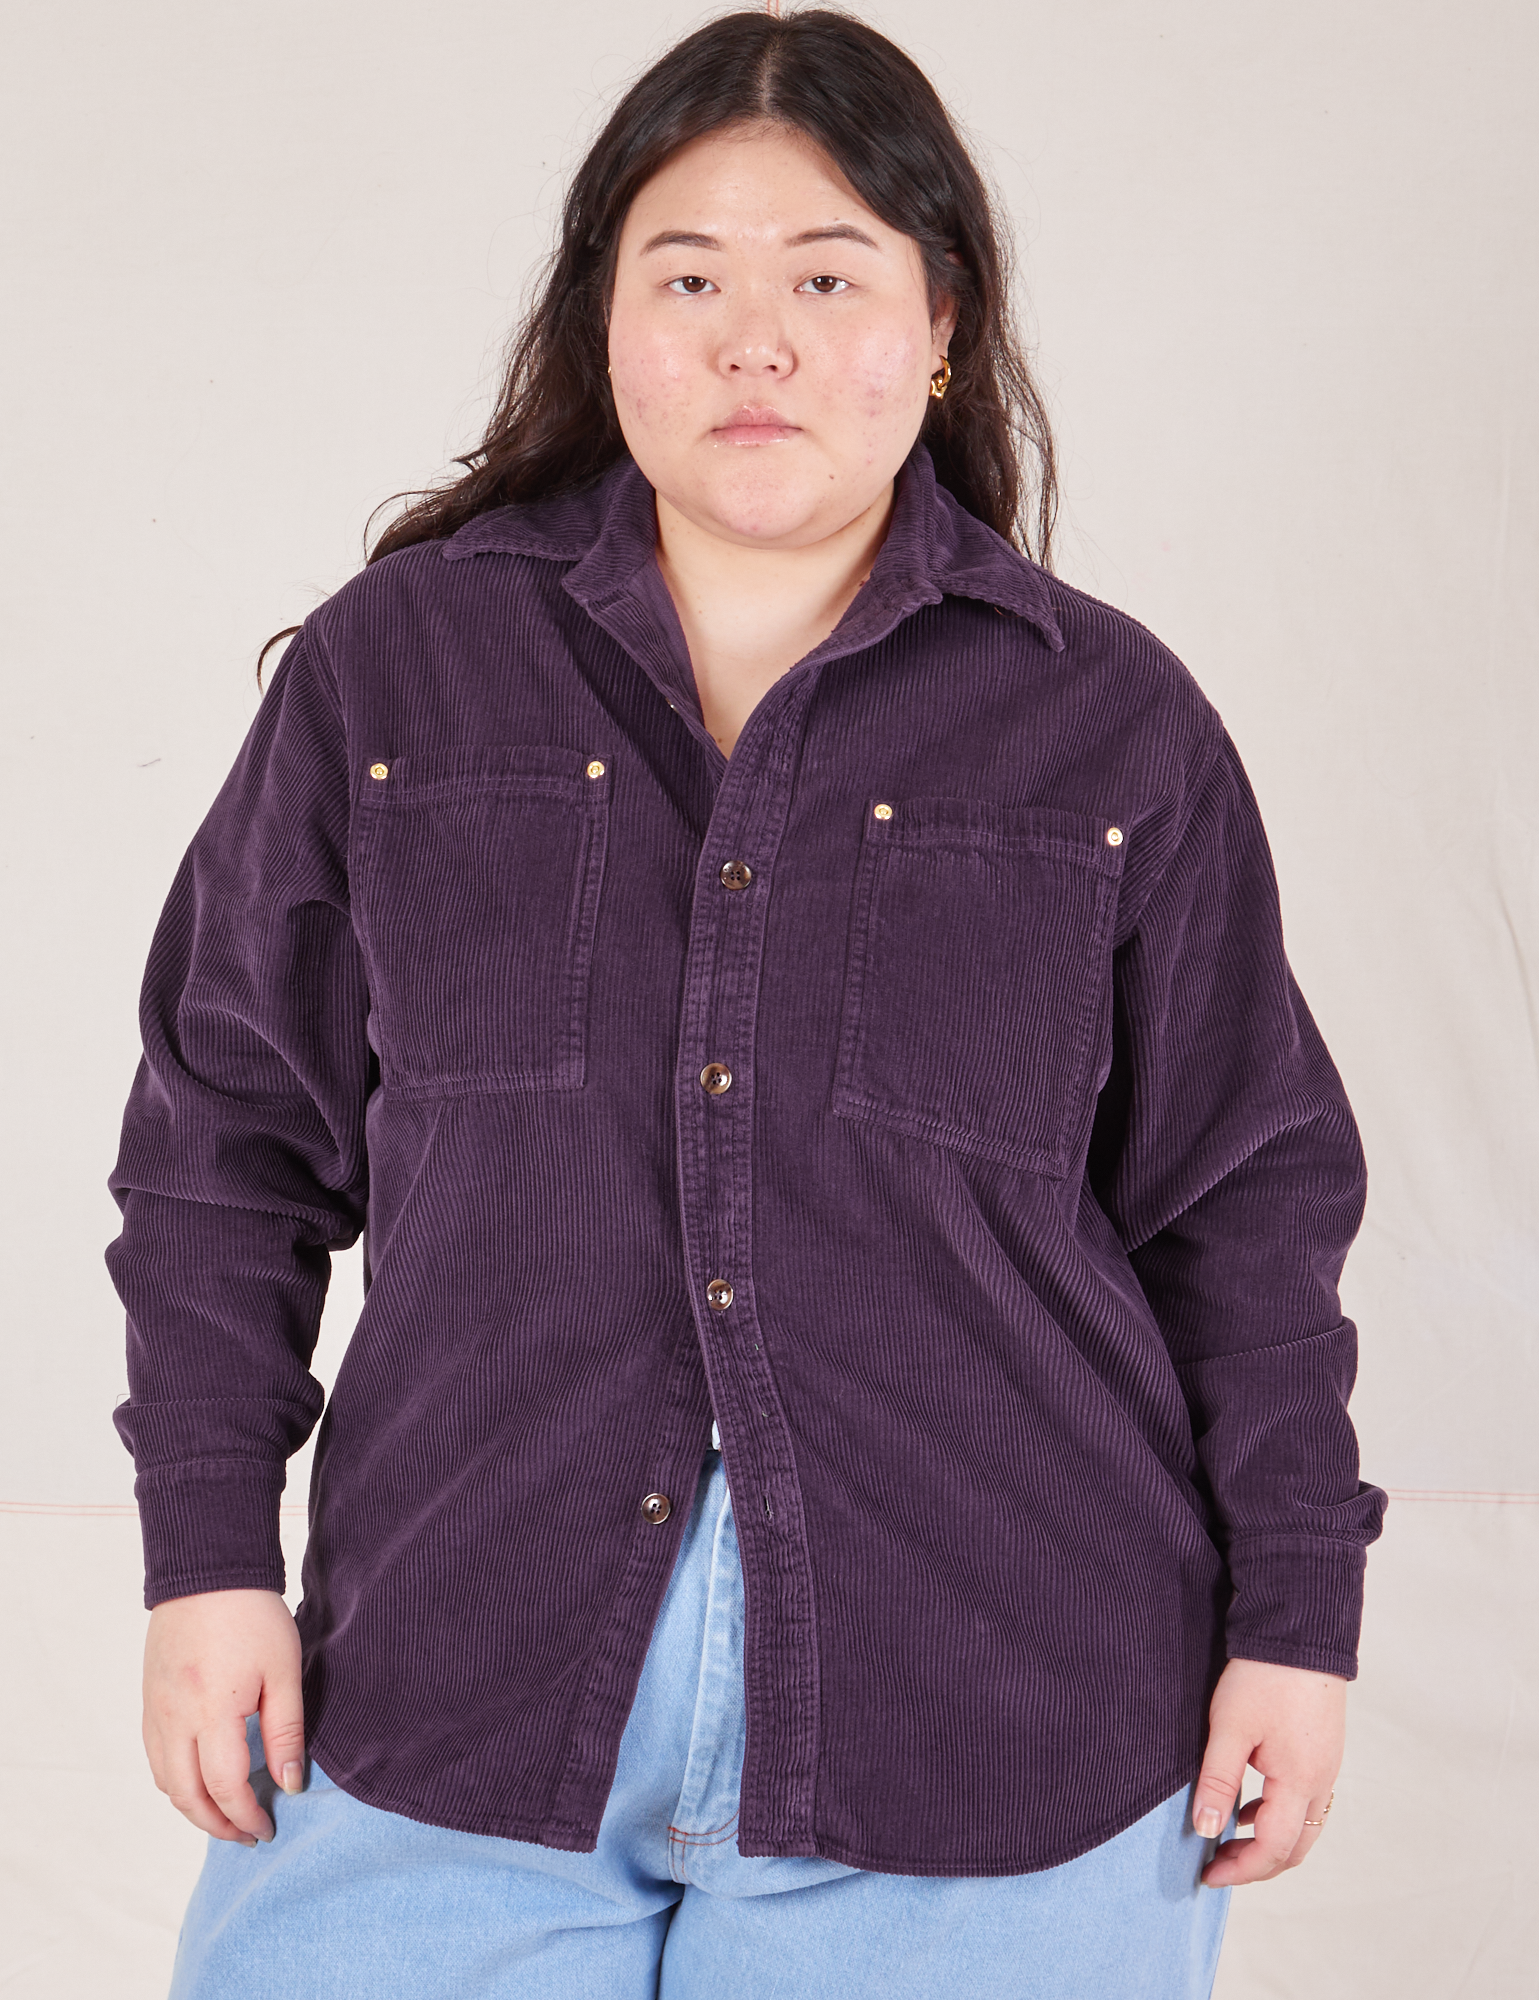 Ashley is 5&#39;7&quot; and wearing M Corduroy Overshirt in Nebula Purple